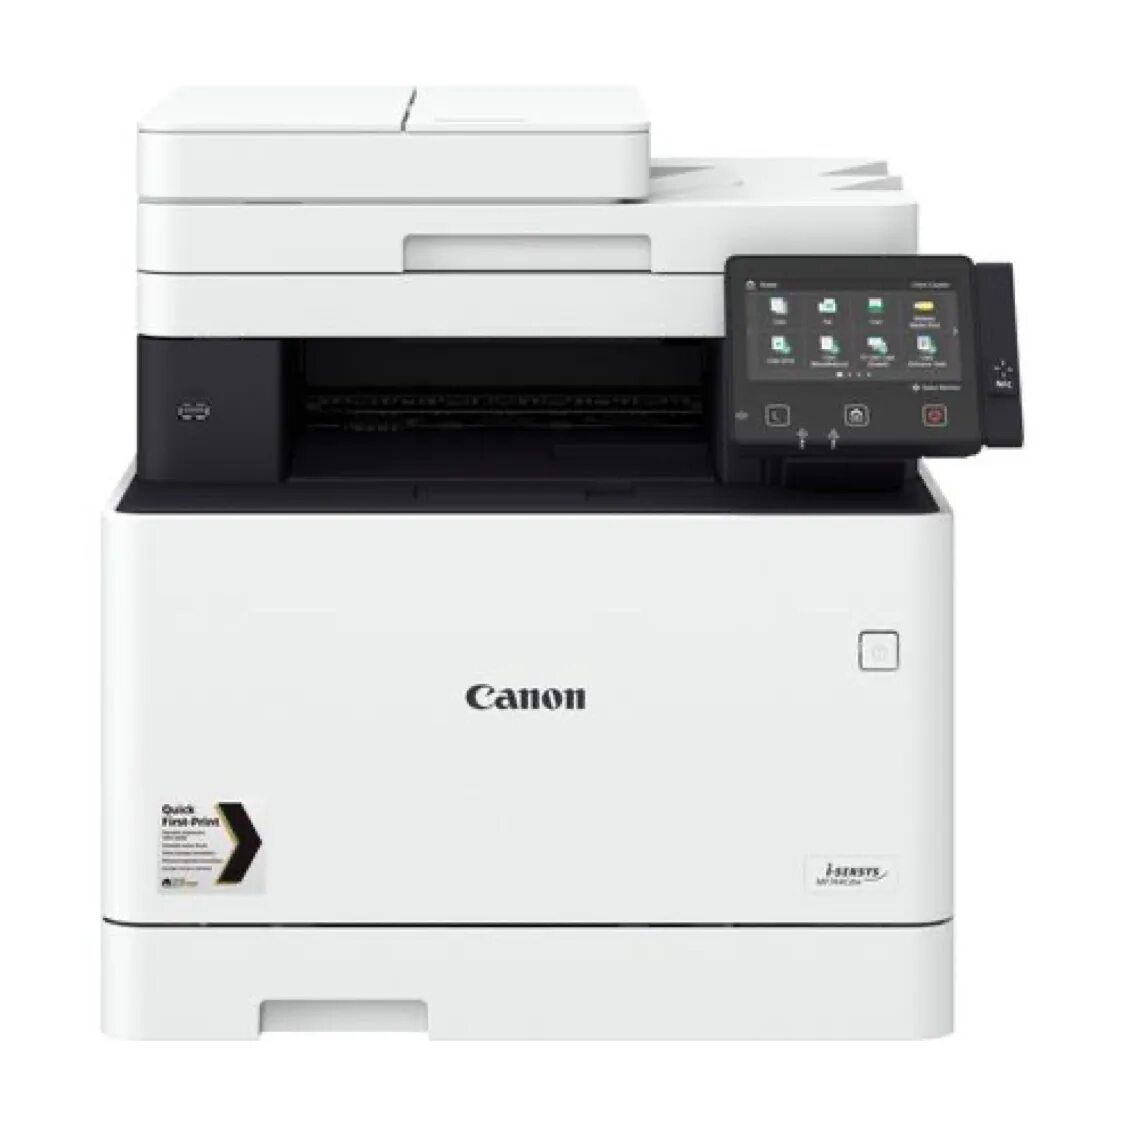 Купить принтер для офиса. Canon i-SENSYS mf744cdw. Canon mf645cx. МФУ Canon i-SENSYS mf641cw. Canon mf542x.